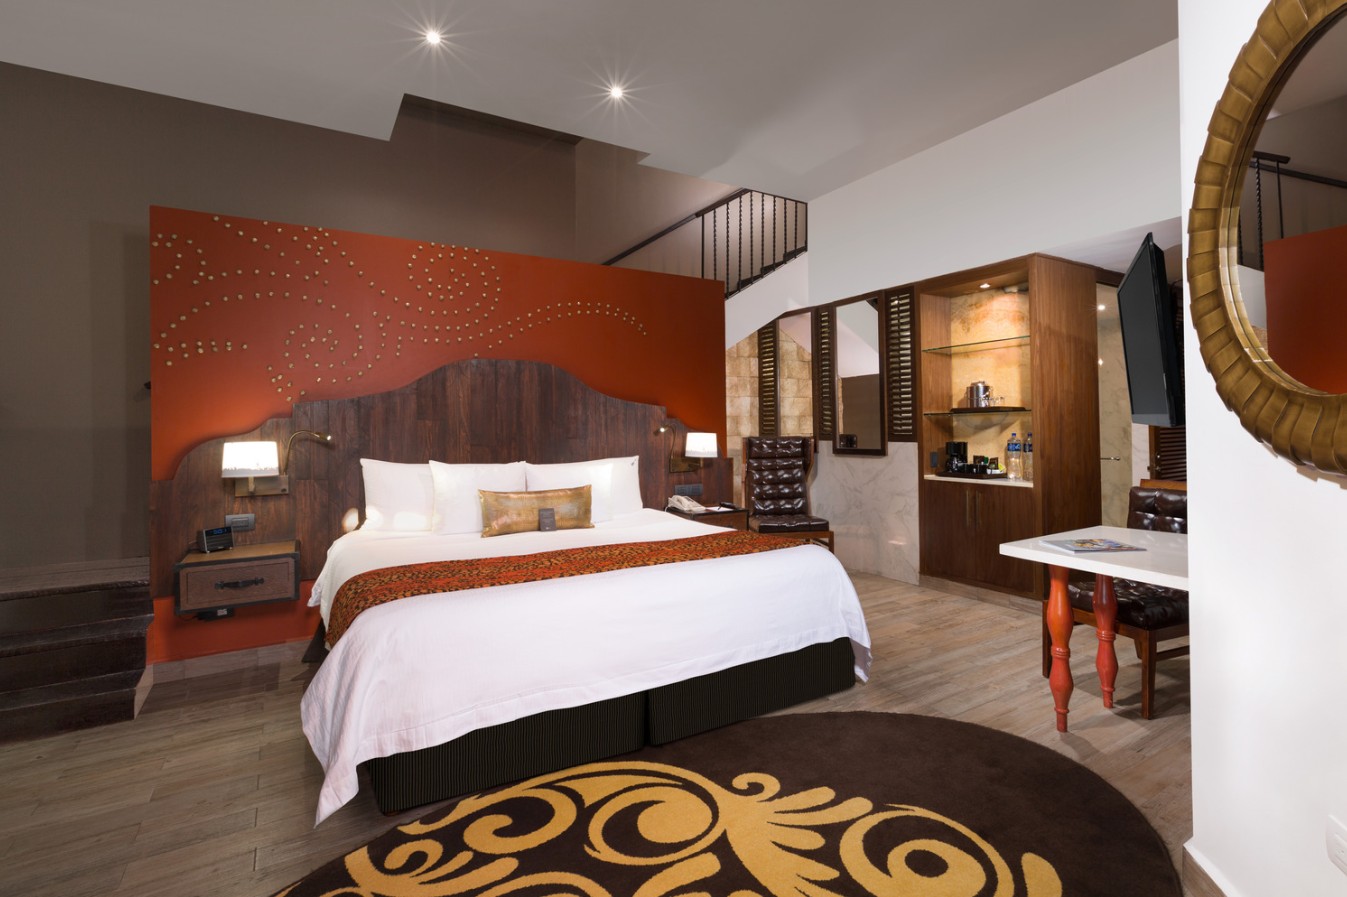 Deluxe Sky Terrace 1 Bedroom (Hacienda), Hard Rock Hotel Riviera Maya 5*